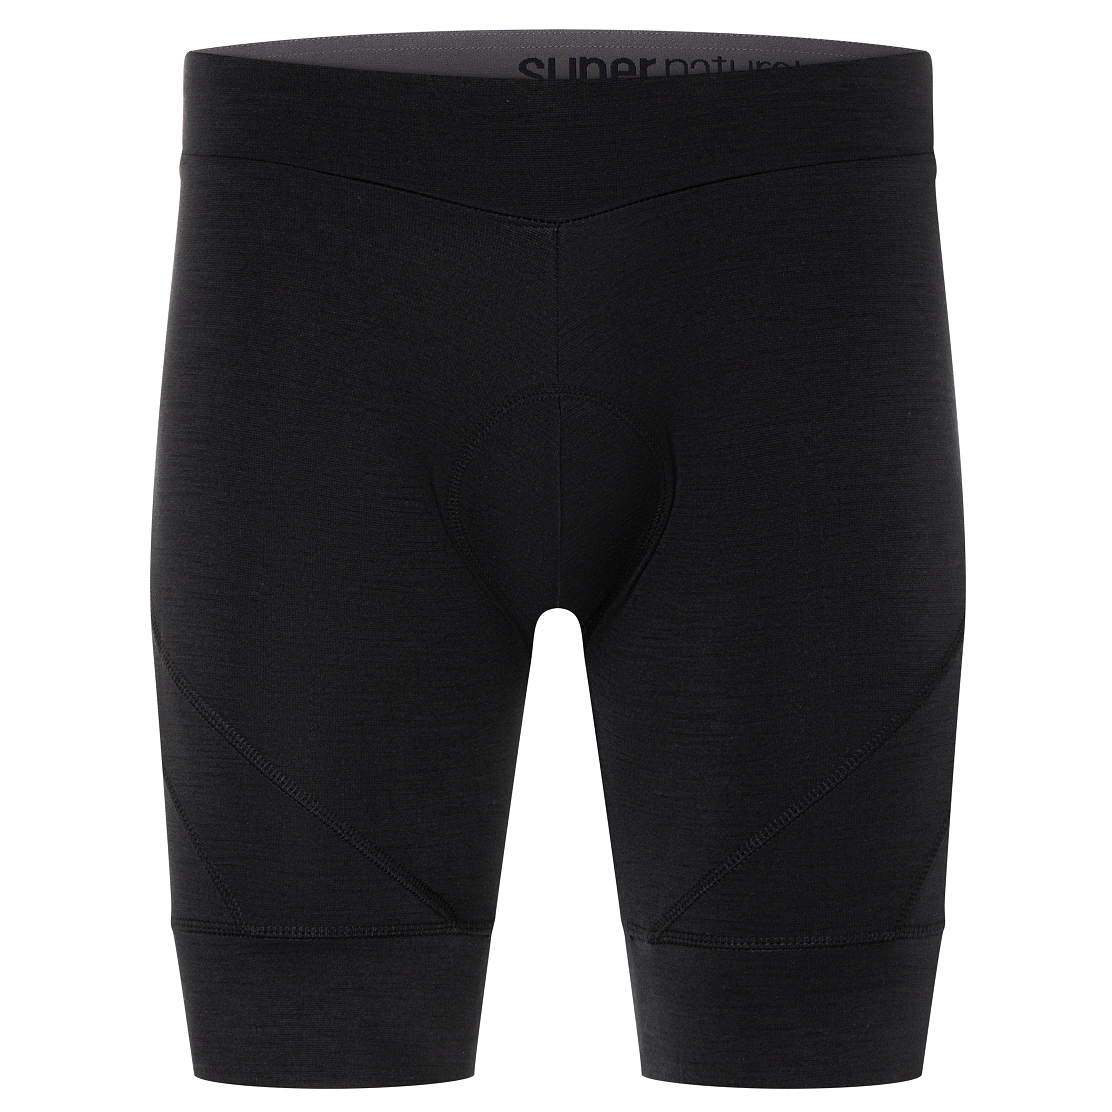 Велосипедные шорты Super Natural Gravier Shorts, цвет Jet Black